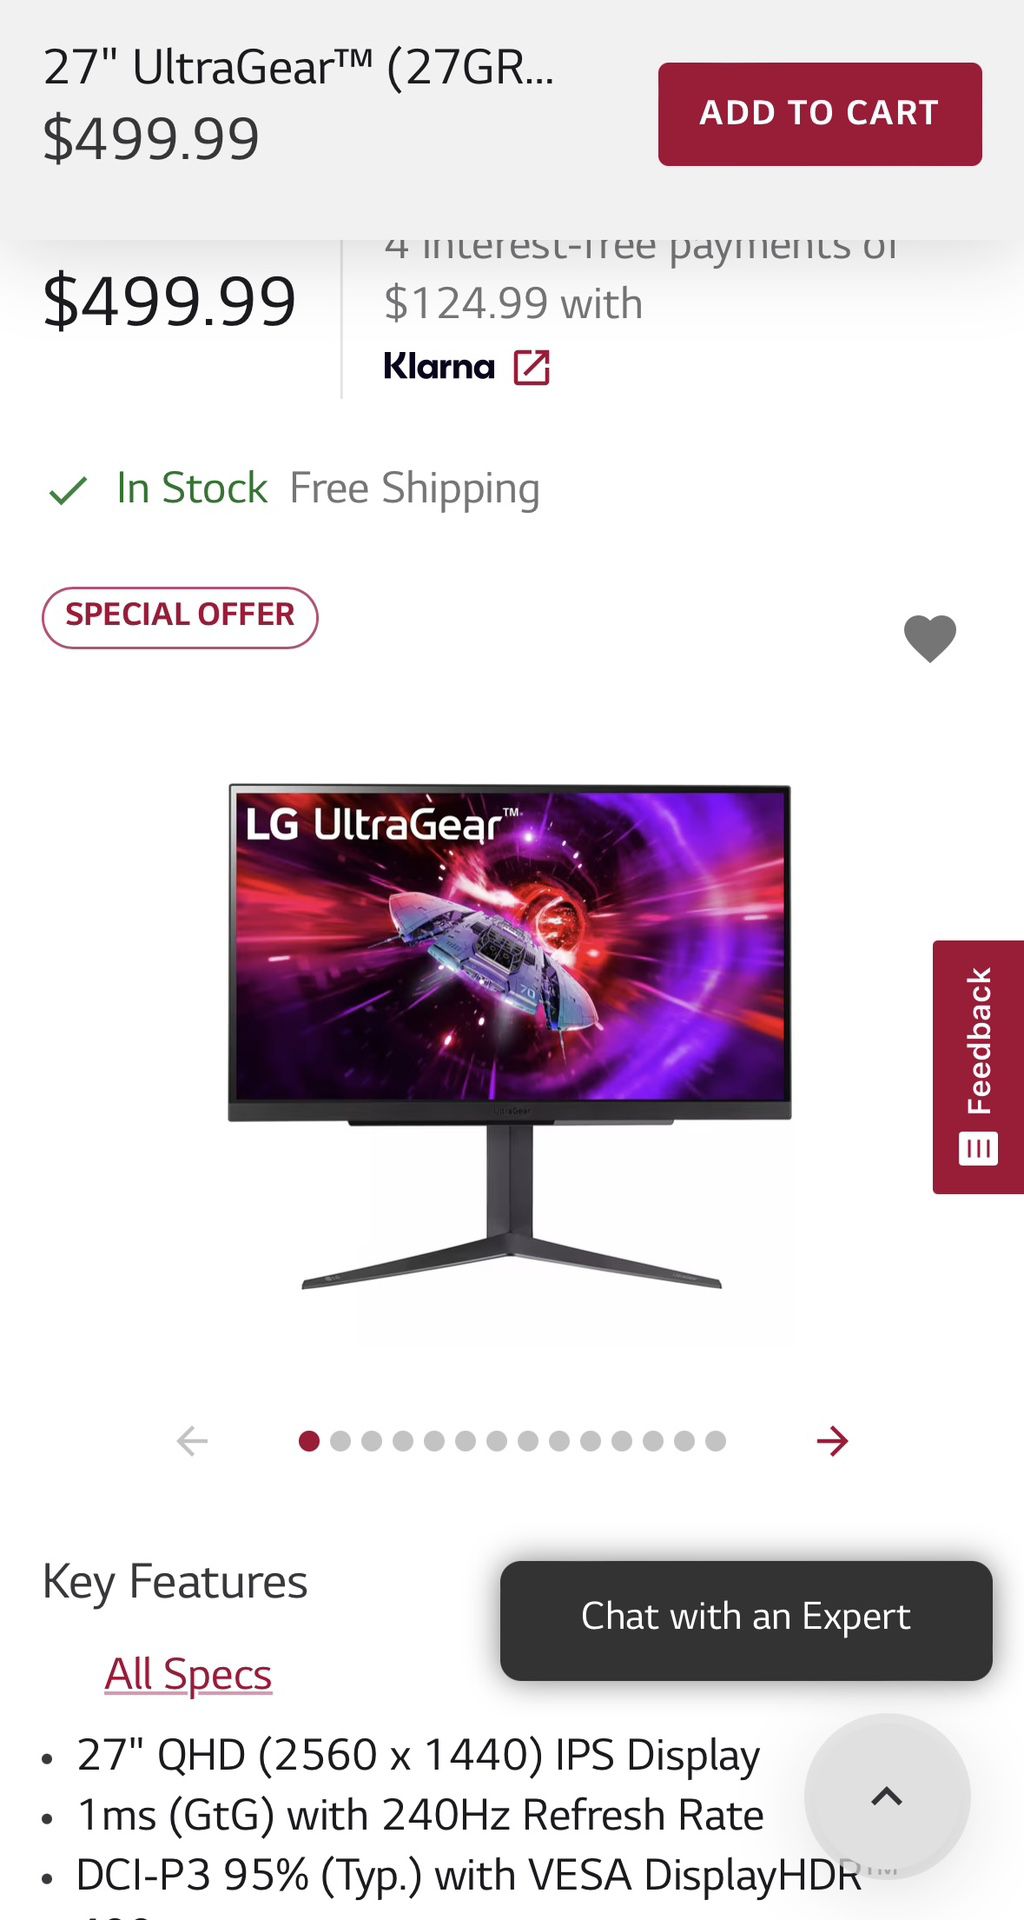 LG UltraGear gaming monitor 240hz 1440p!